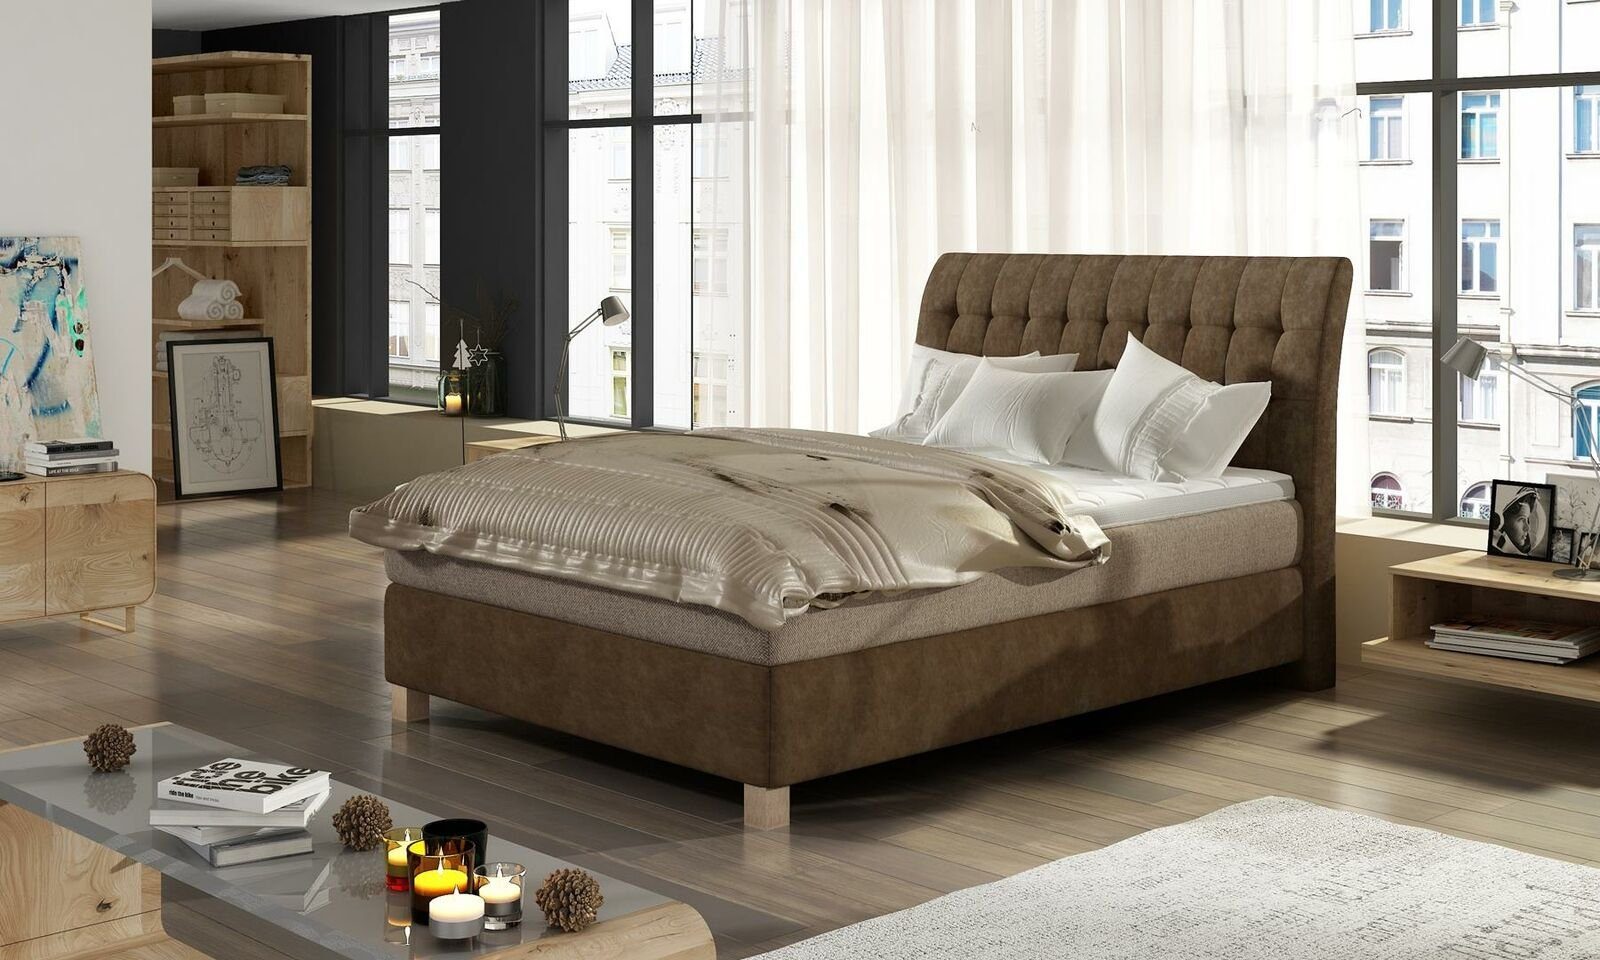 JVmoebel Braun Einrichtung 140x200cm Doppel Betten Bett Design Bett, Möbel Schlafzimmer